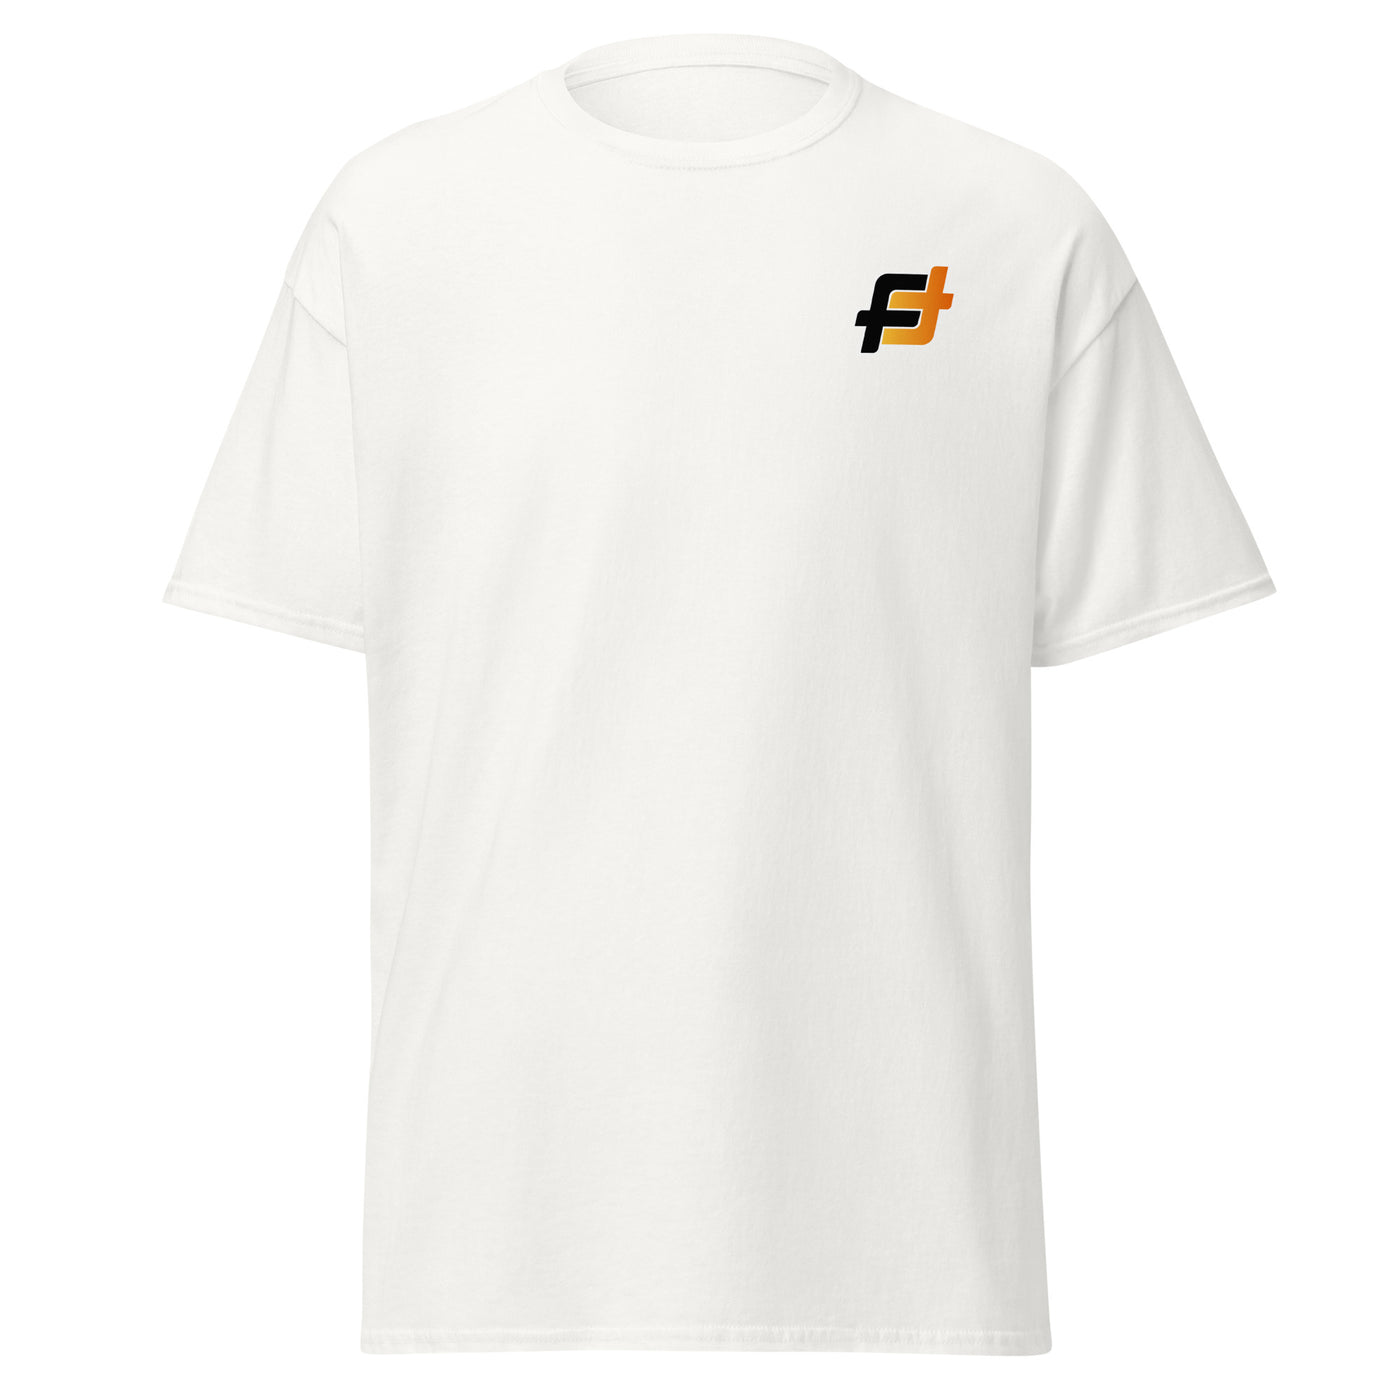 Faketaxy Unisex T-Shirt